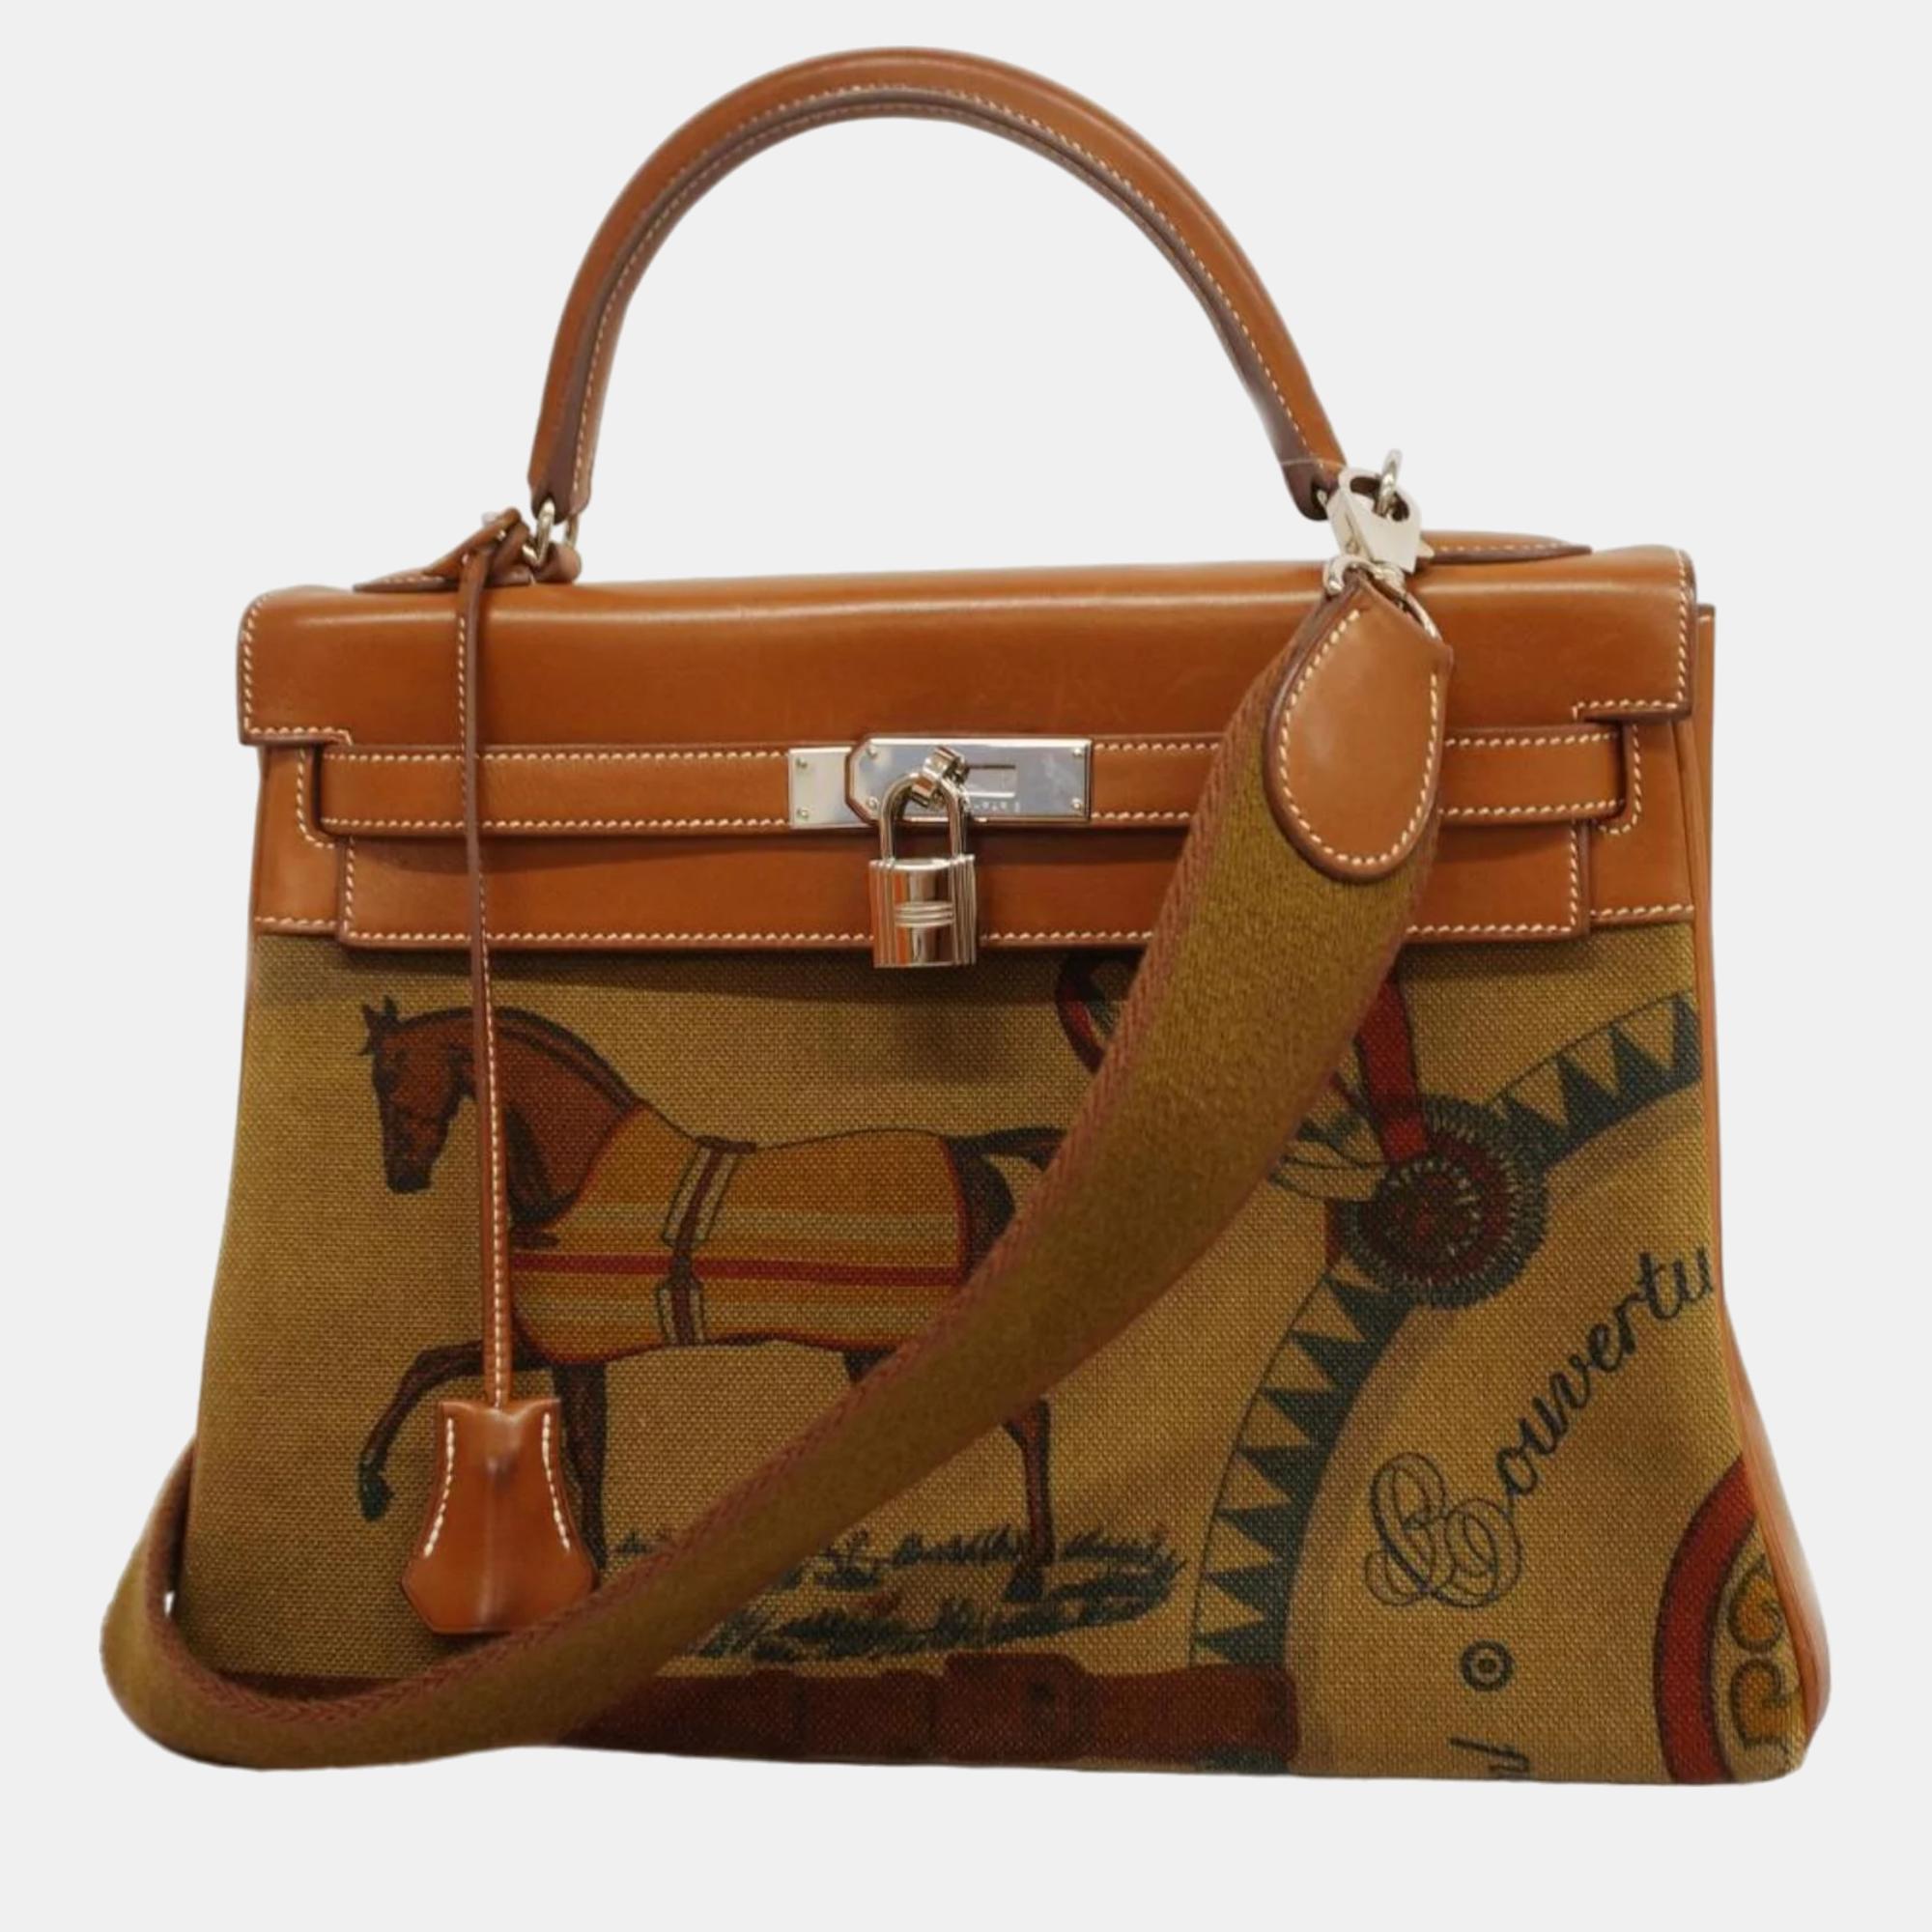 Hermes barenia toile couver faube tundra kelly engraved handbag